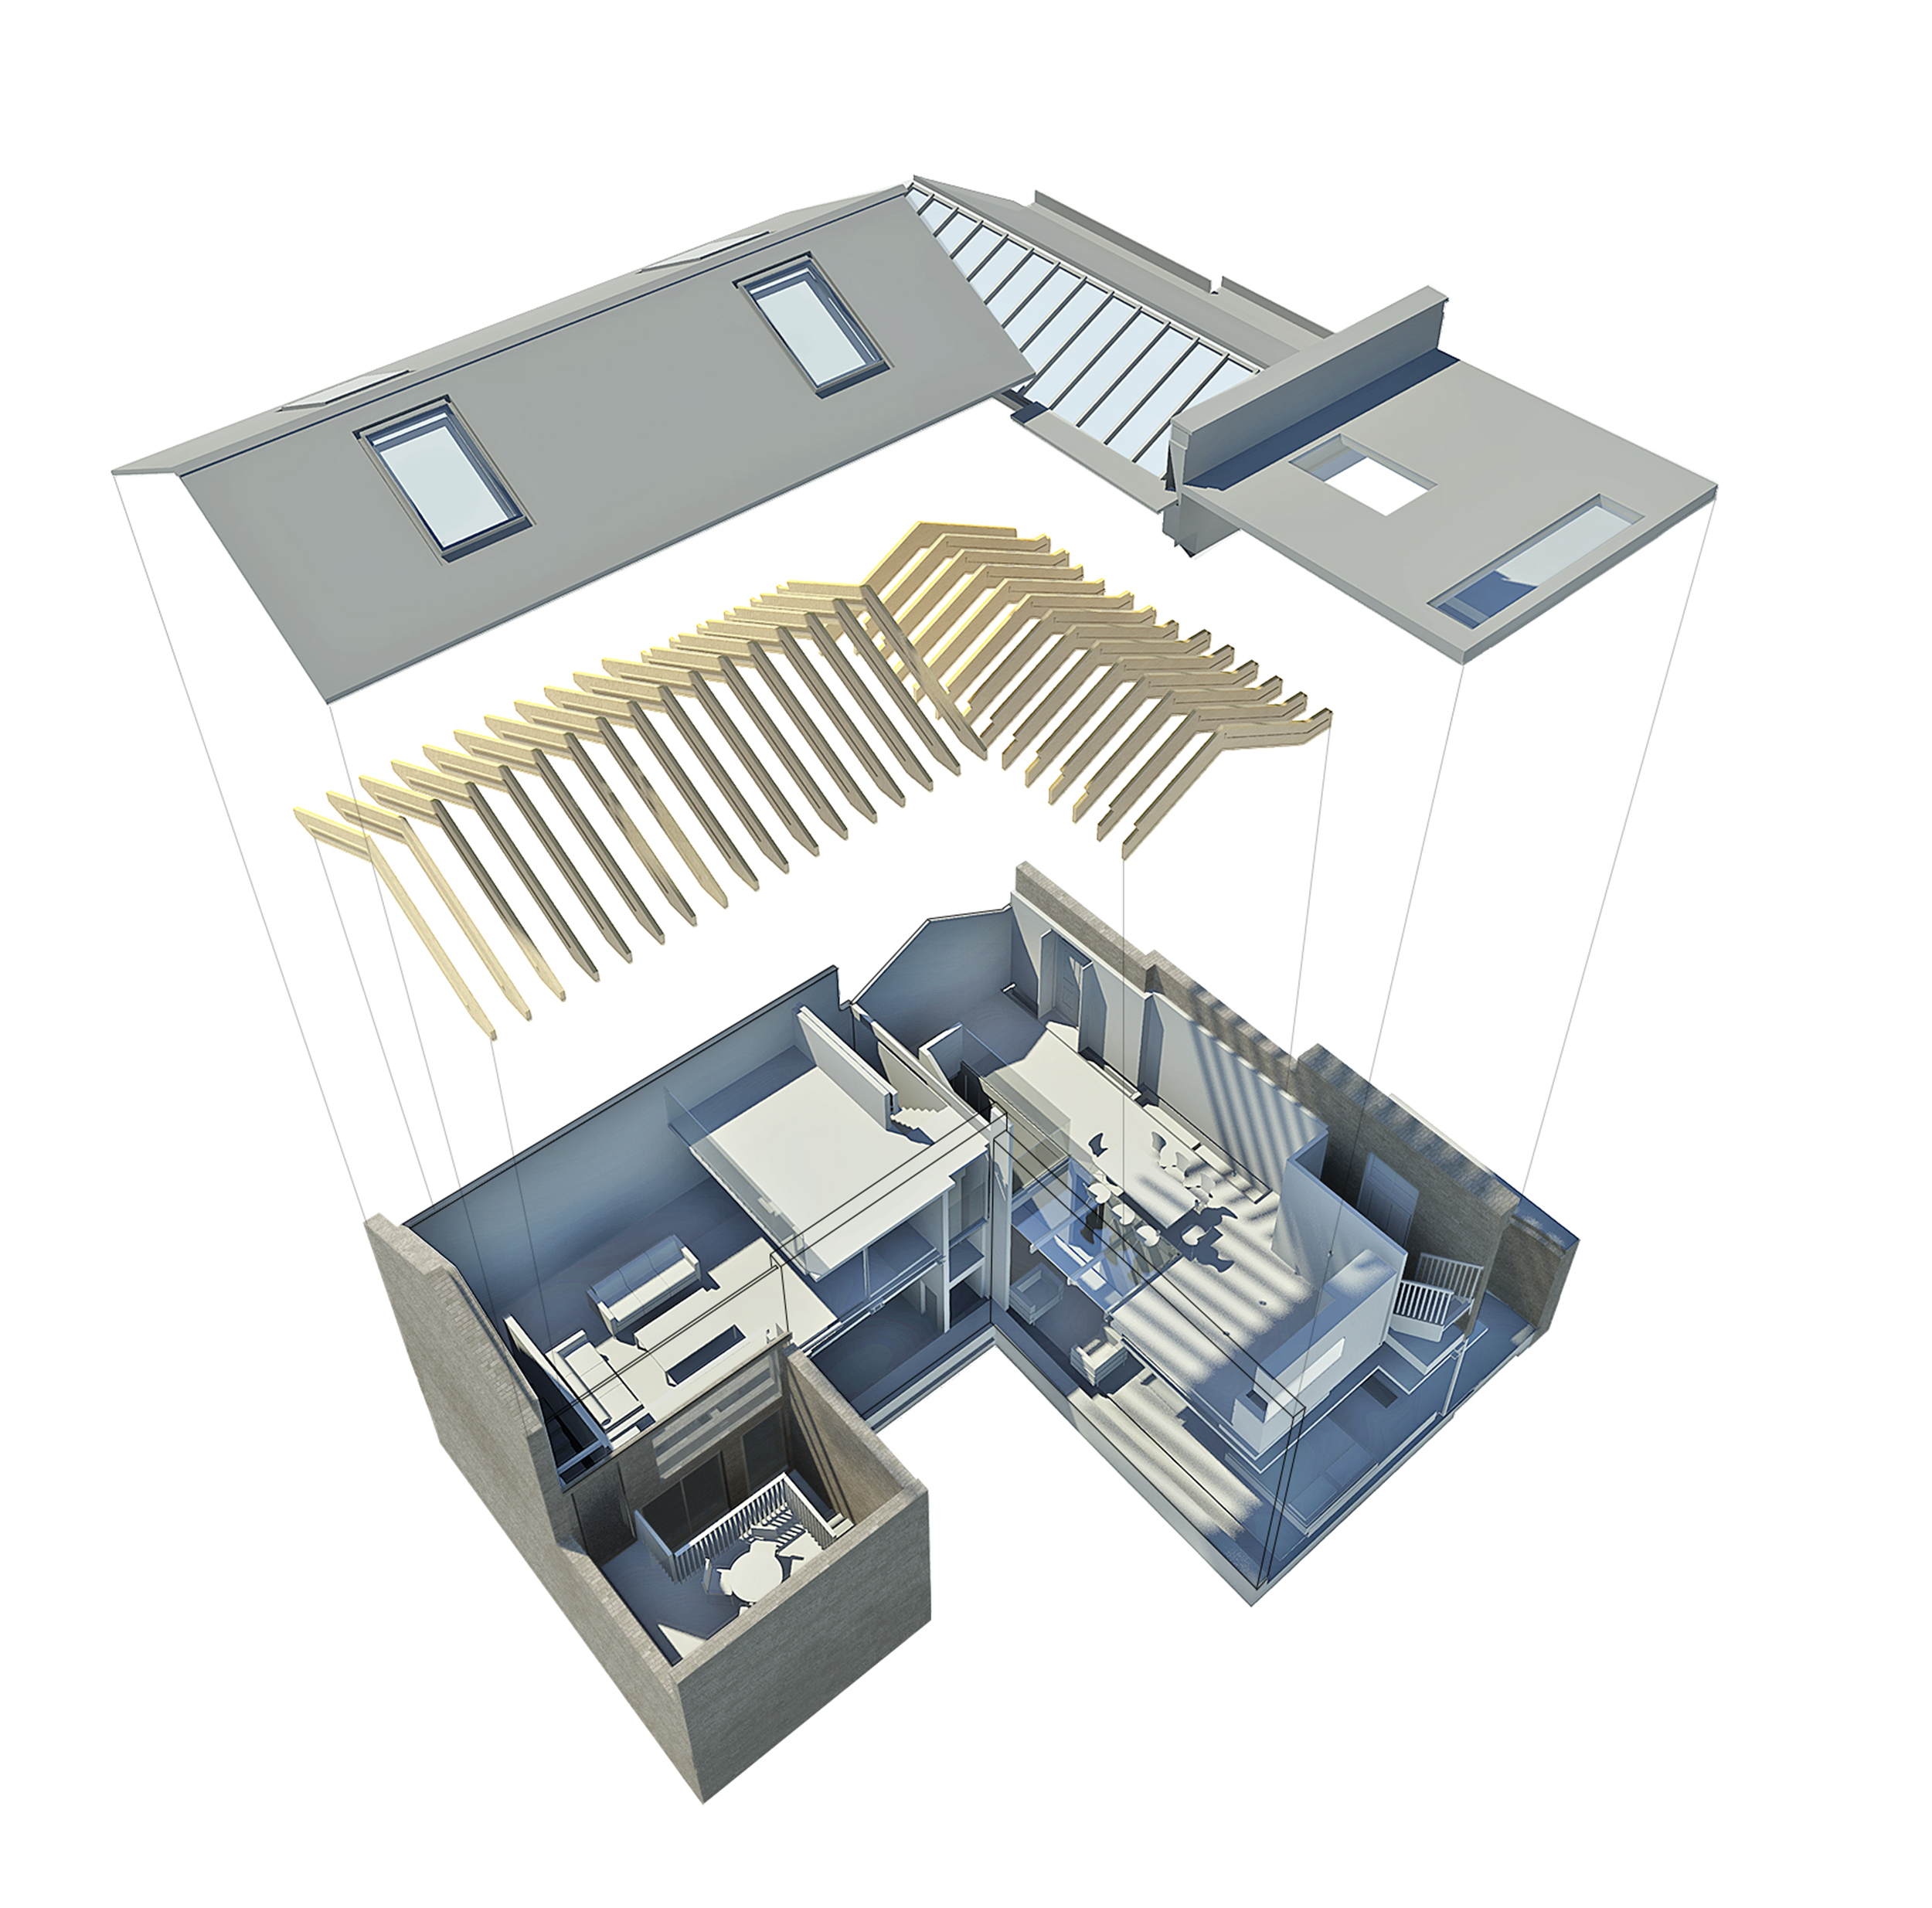 Hidden House Chelsea Knightsbridge LTS Architects exploded isometric